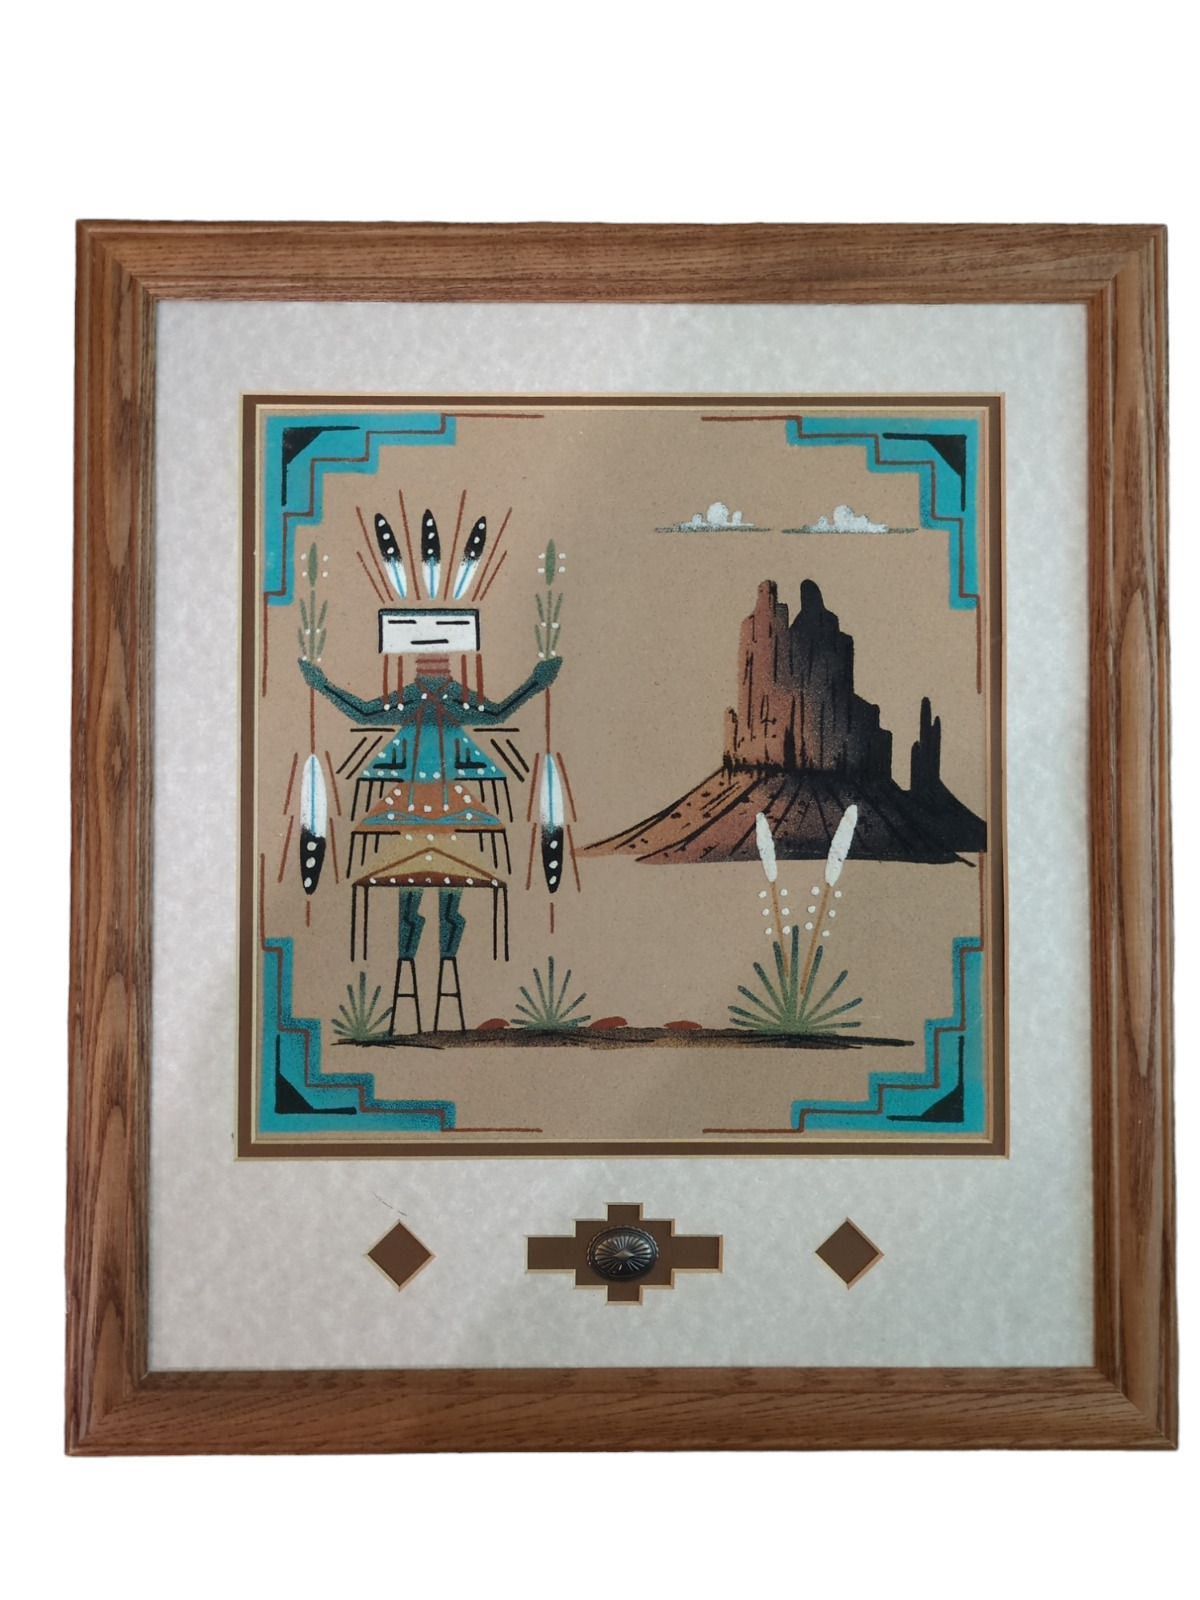 Navajo Sand Painting Framed Native American Handmade Art Signed D Johnson